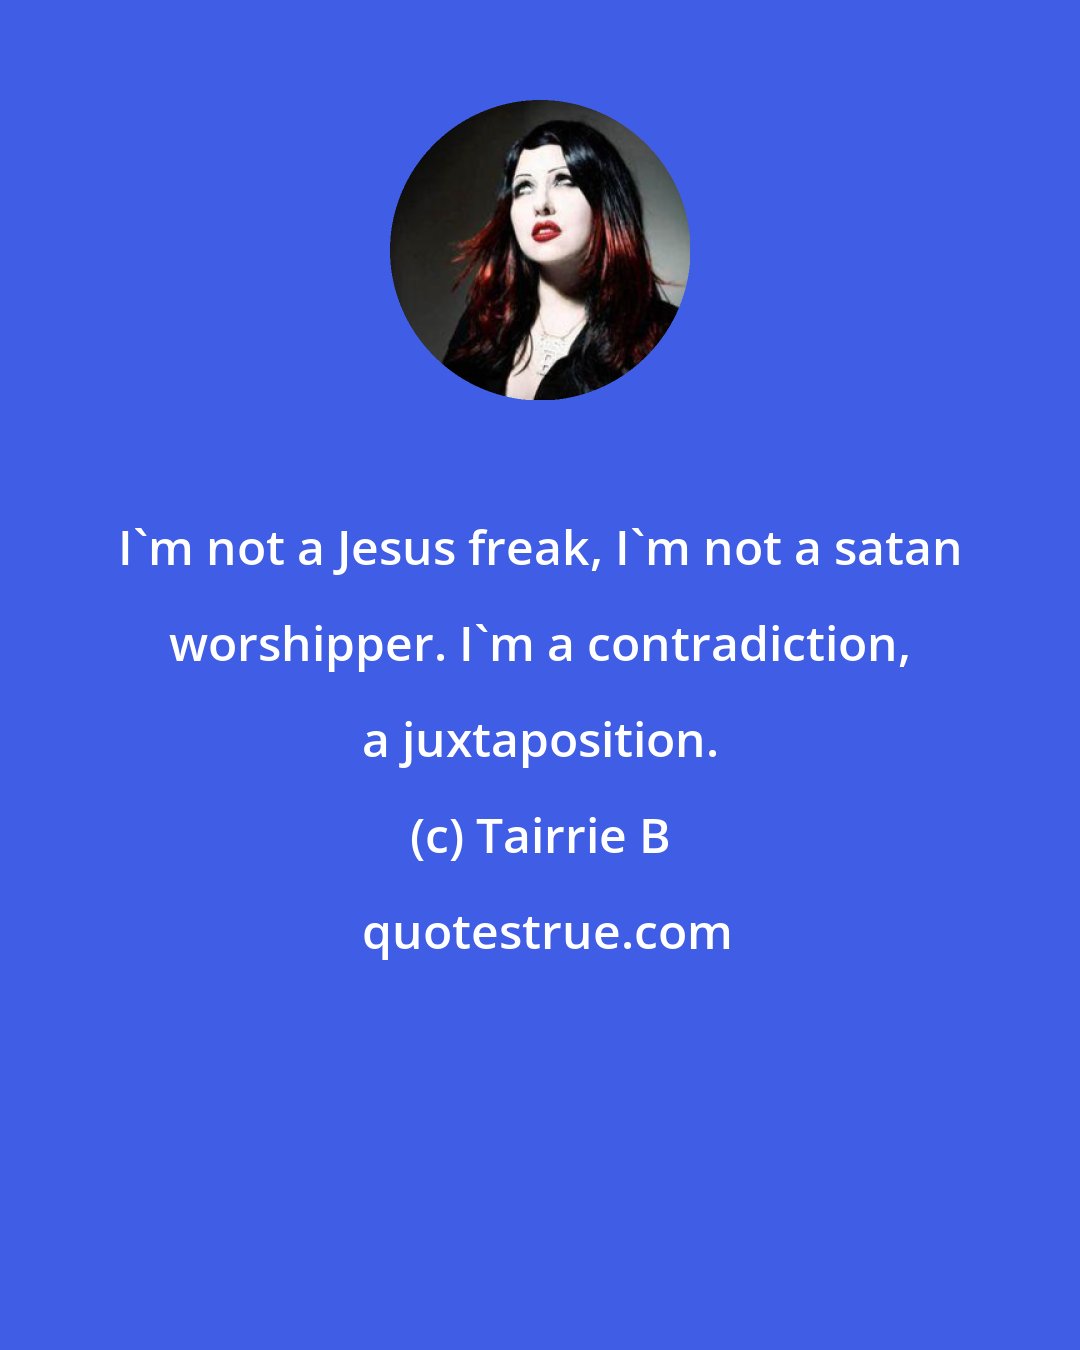 Tairrie B: I'm not a Jesus freak, I'm not a satan worshipper. I'm a contradiction, a juxtaposition.